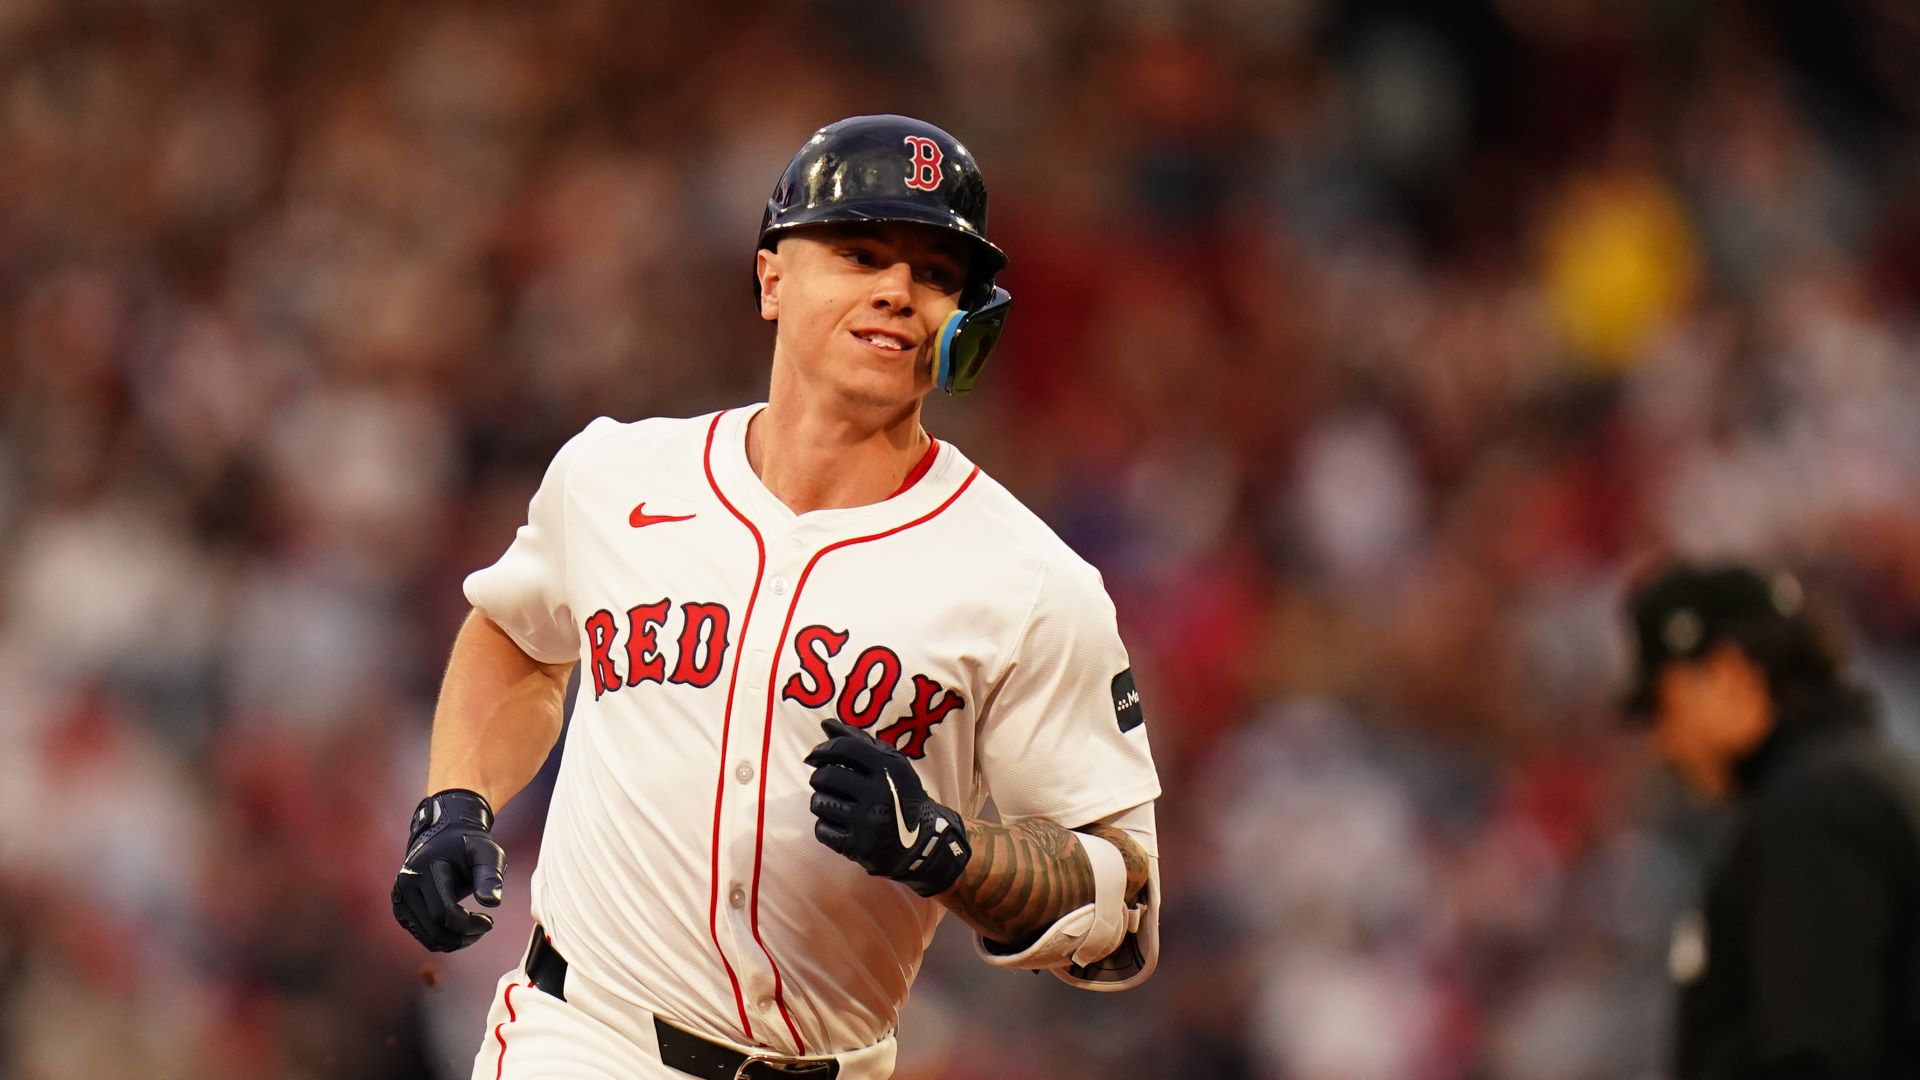 Red Sox Notes: Tyler O’Neill’s Blast Helping Put Slump Behind
Slugger